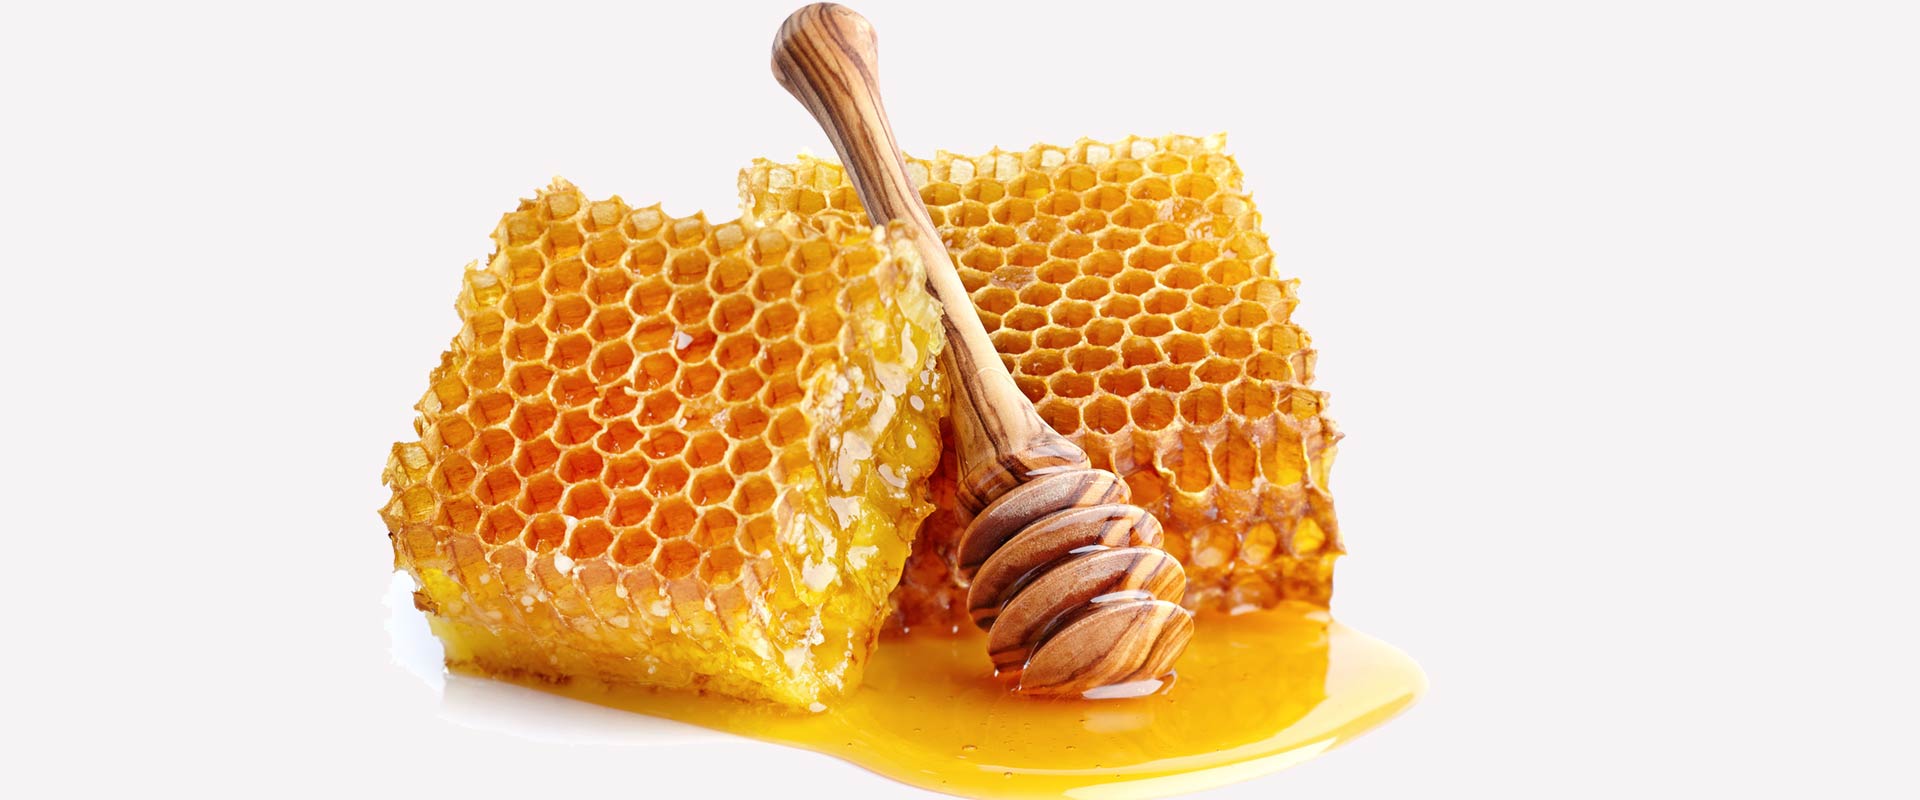 natural bee pollen wholesale suppliers India,propolis dealers Delhi,bee wax traders Dubai,royal jelly distributors India,bee keeping equipments wholesalers Delhi